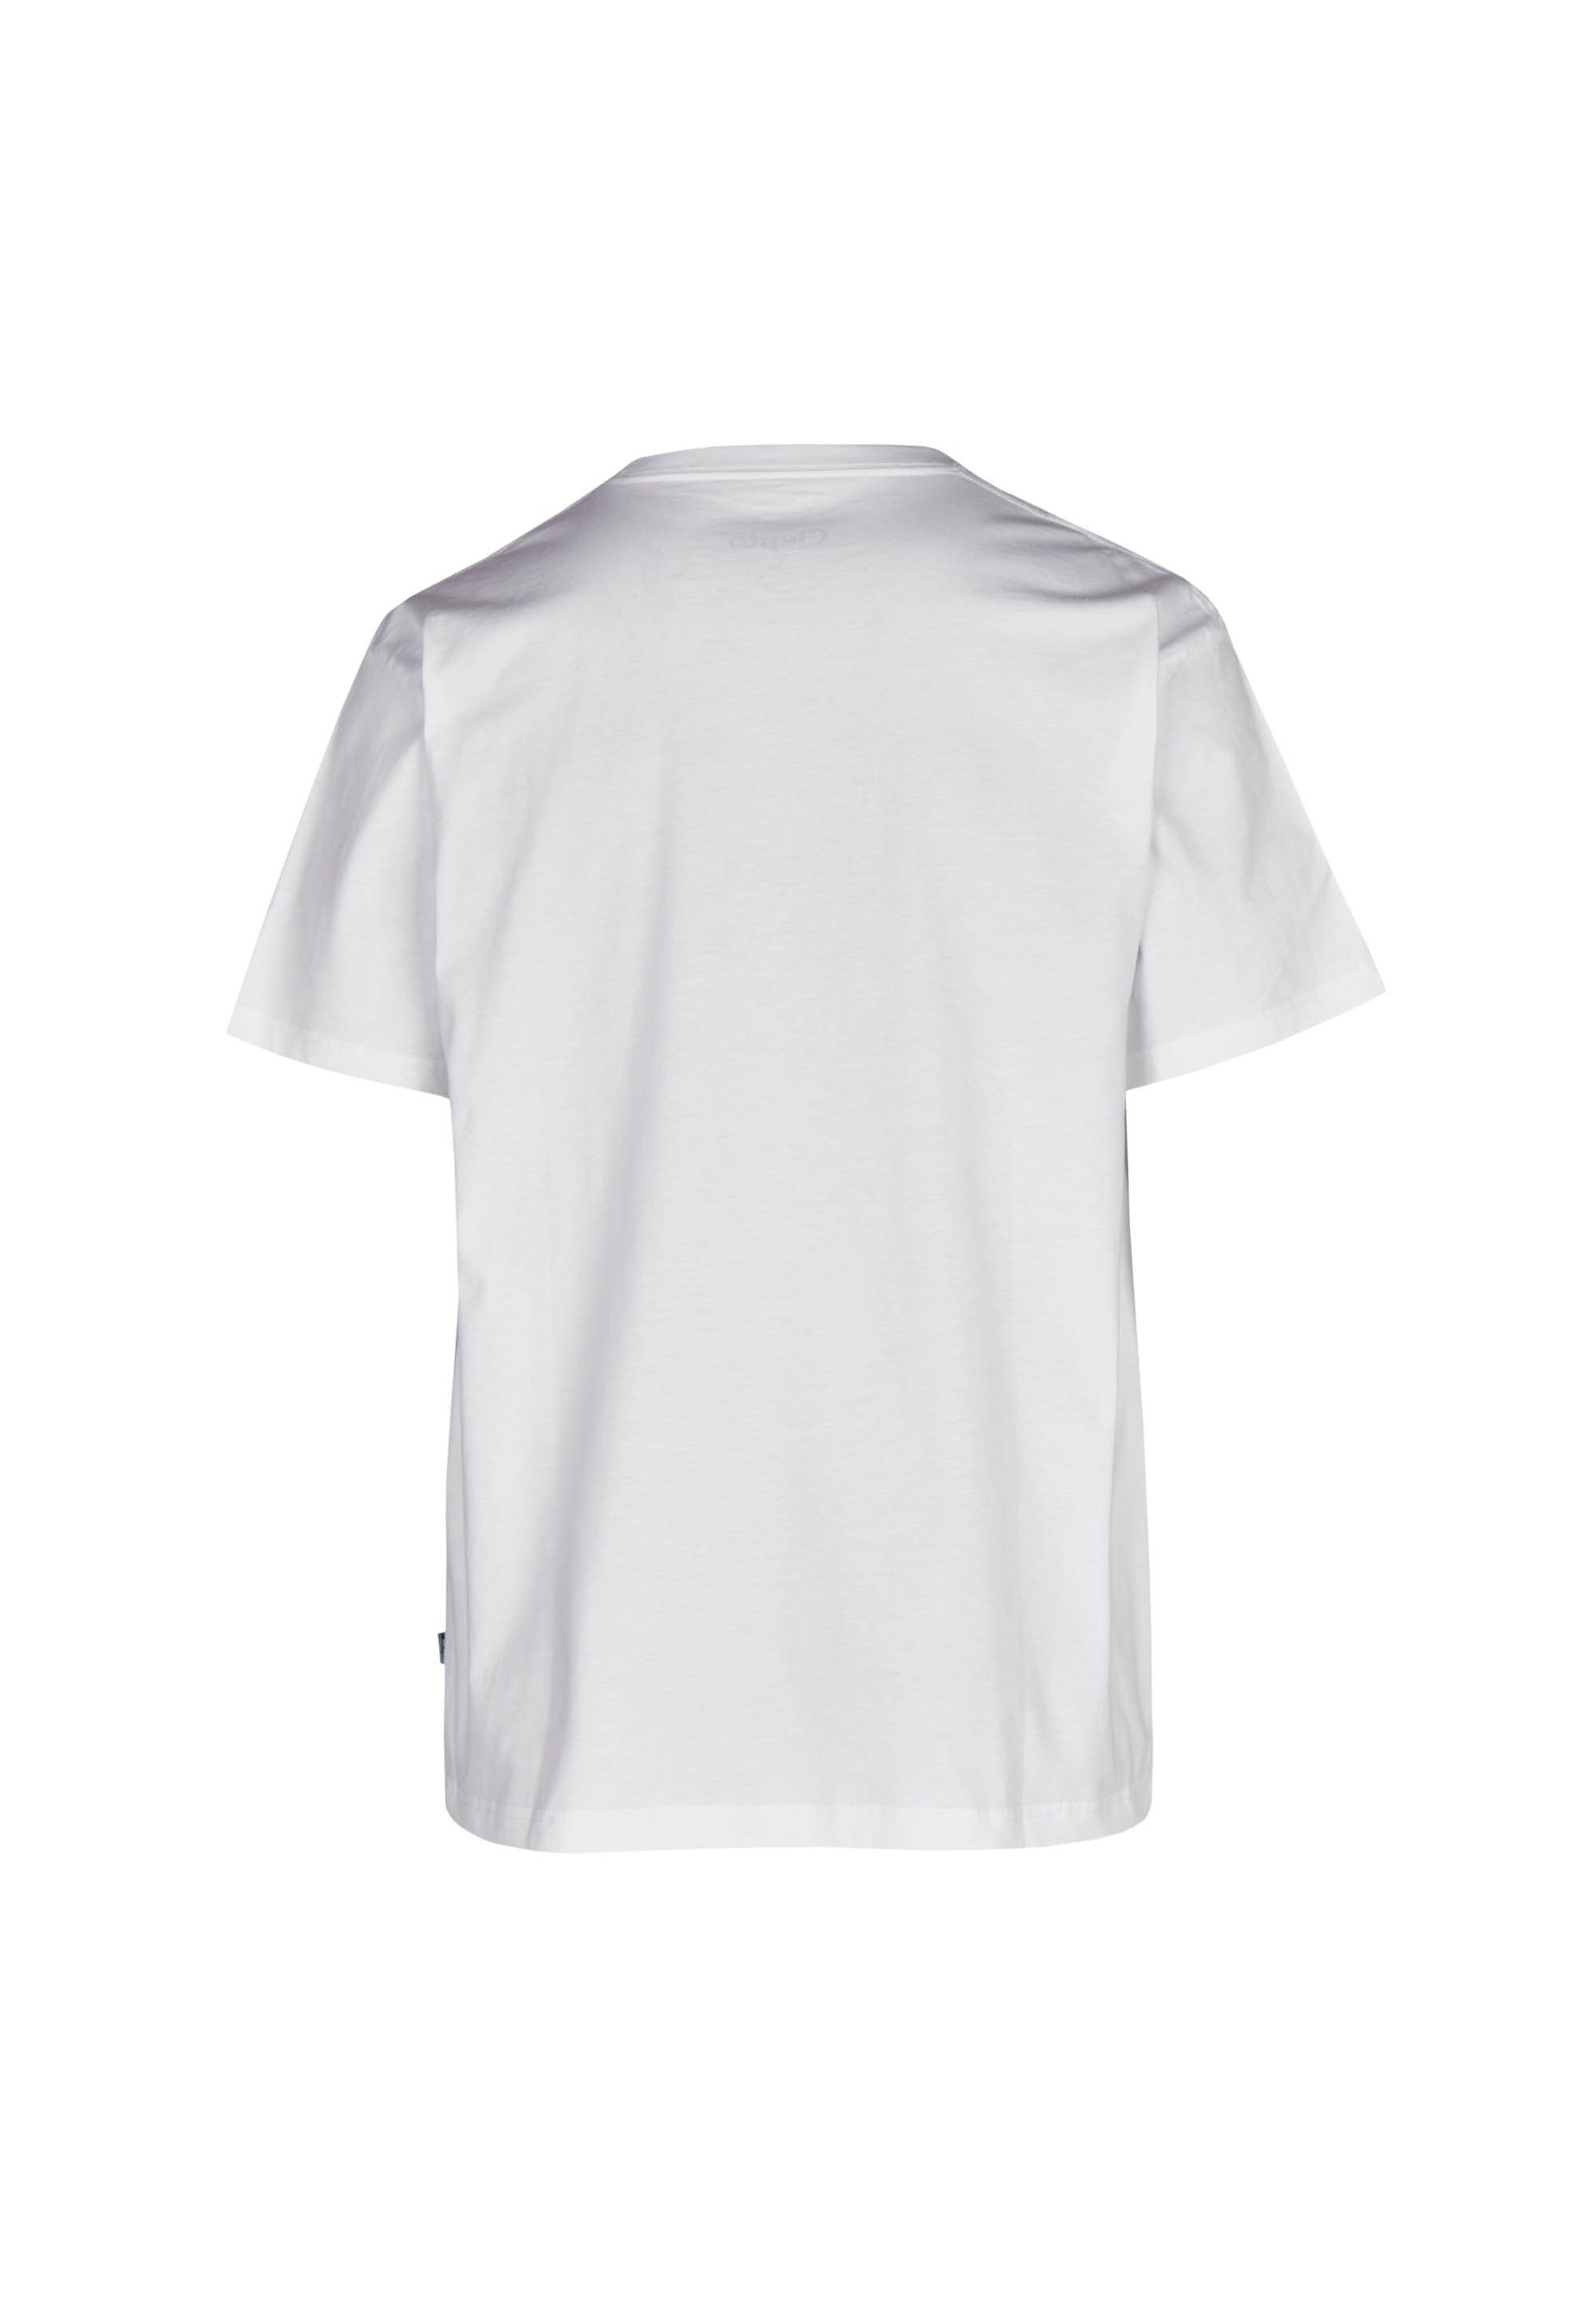 T-Shirt mit weiß Schnitt Mono Cleptomanicx lockerem Gull Embroidery